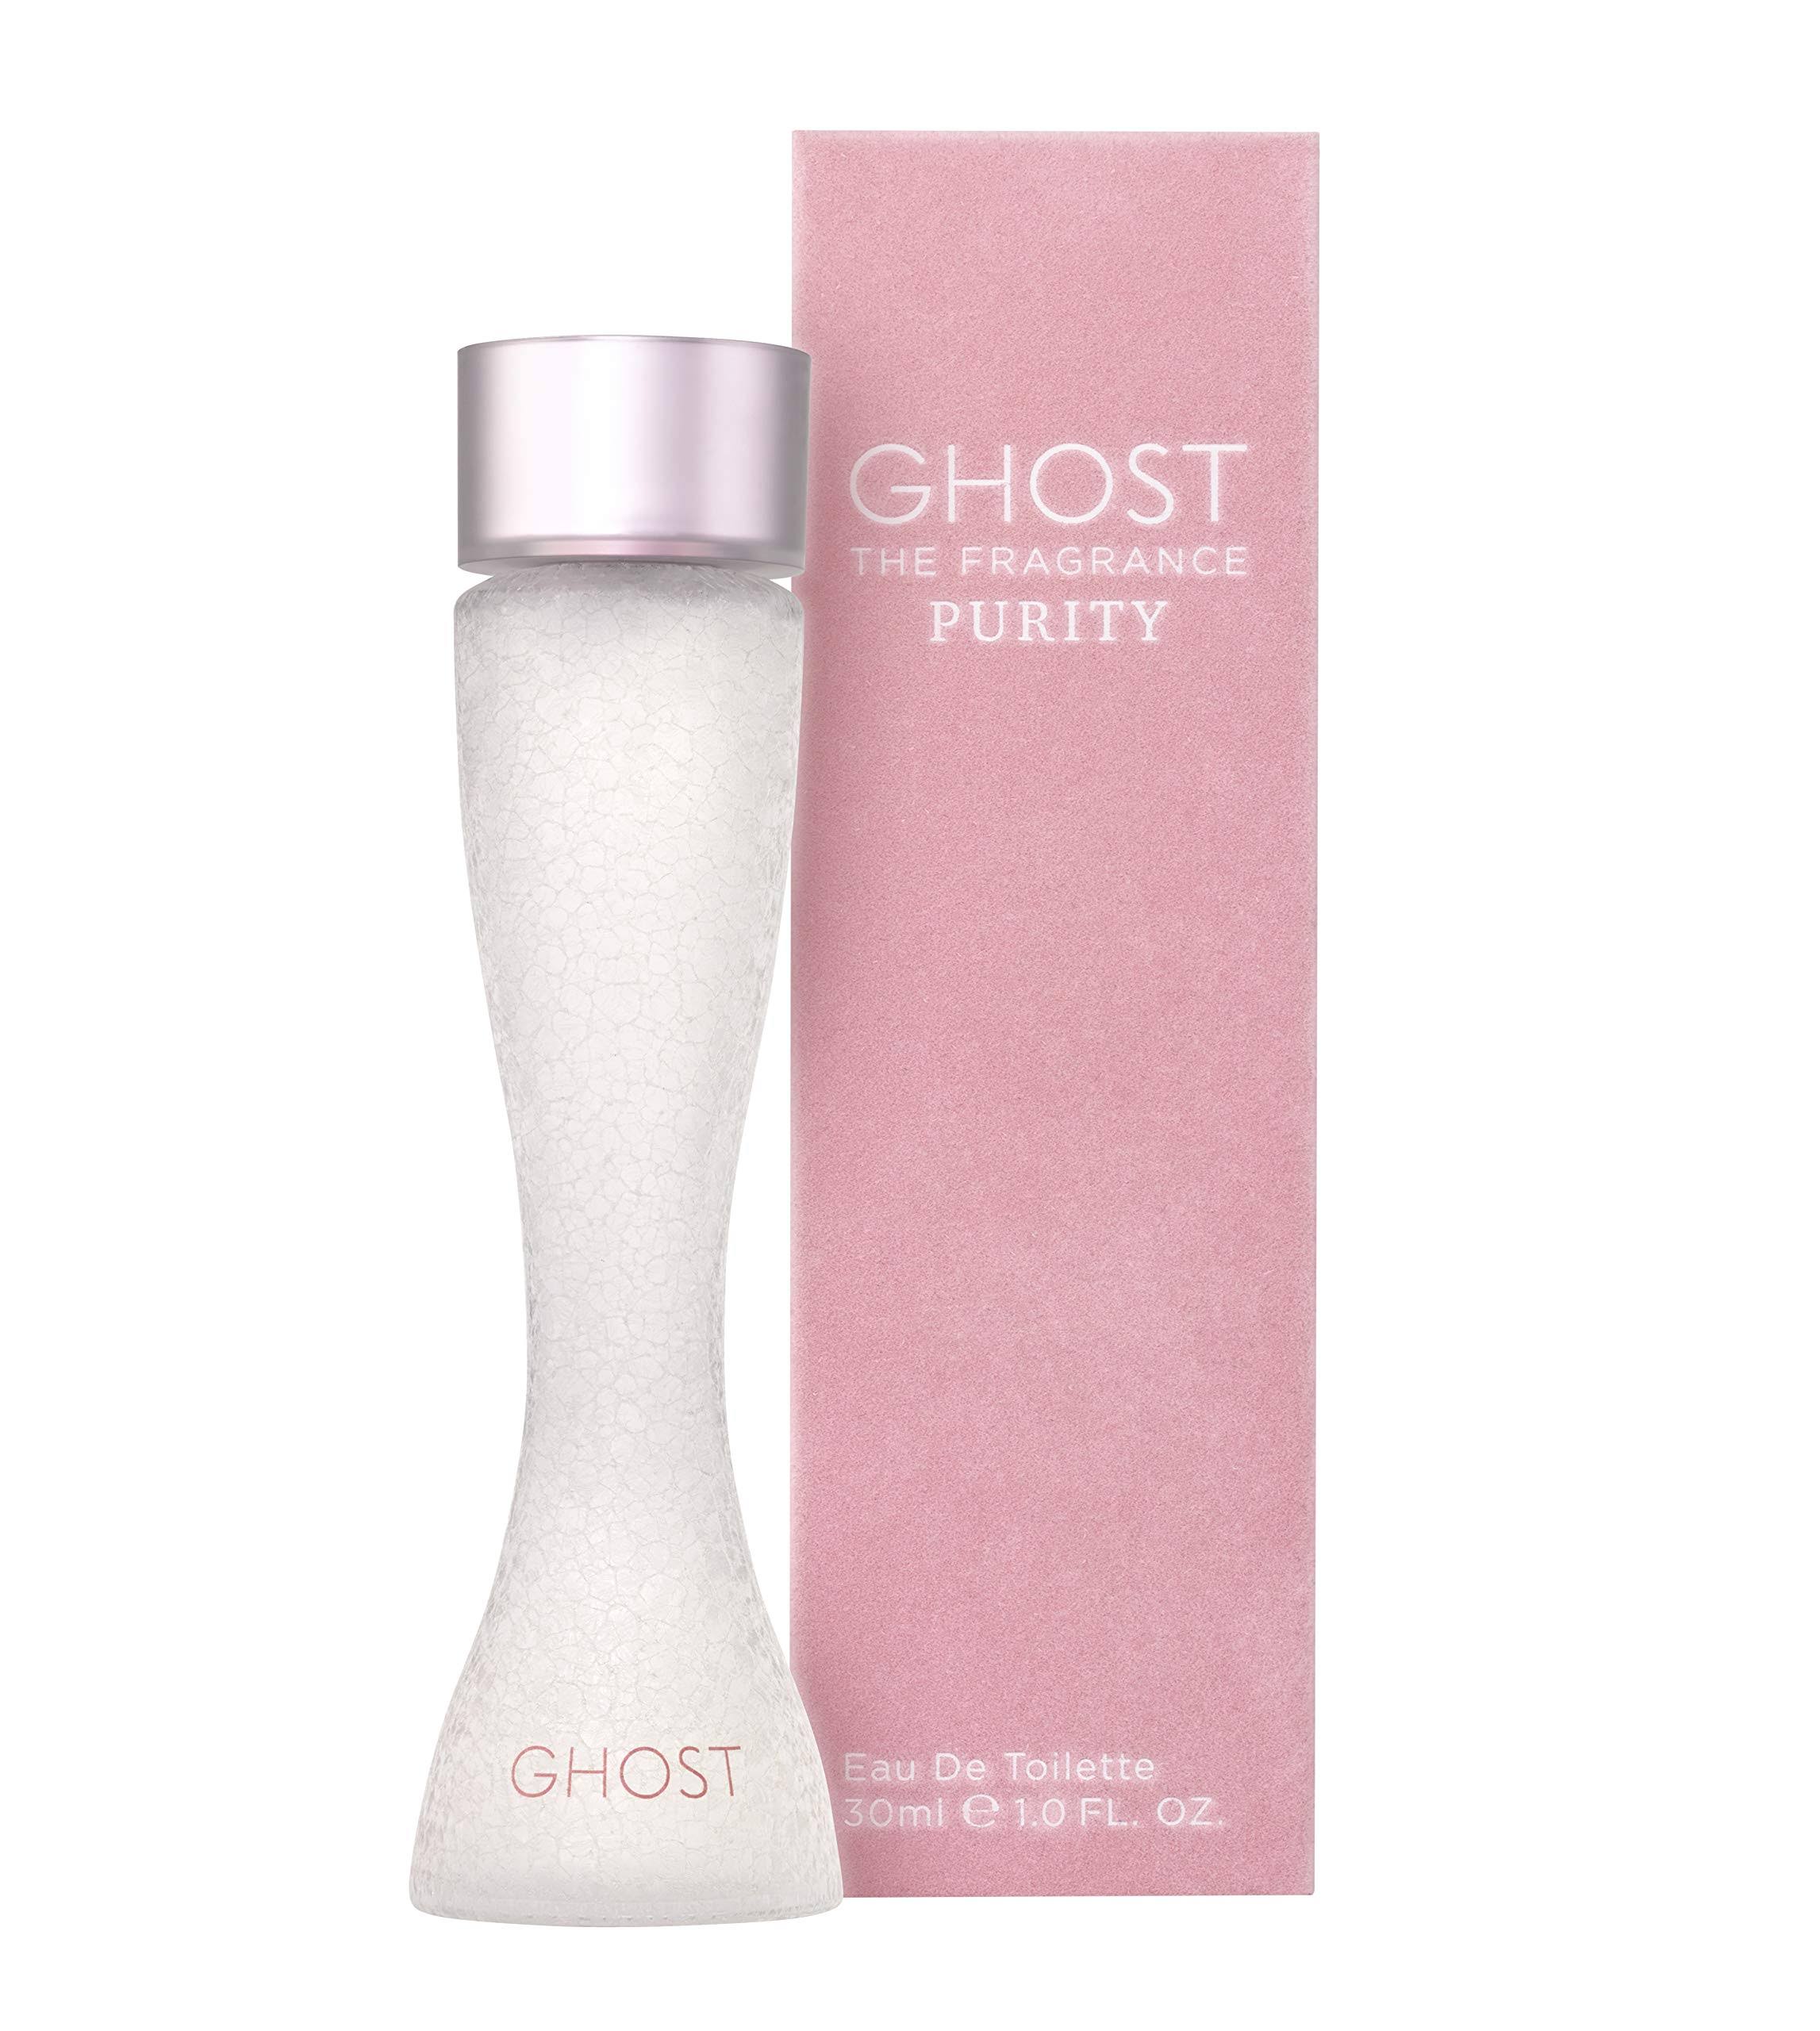 Ghost The Fragrance Purity 30ml Eau de Toilette Spray